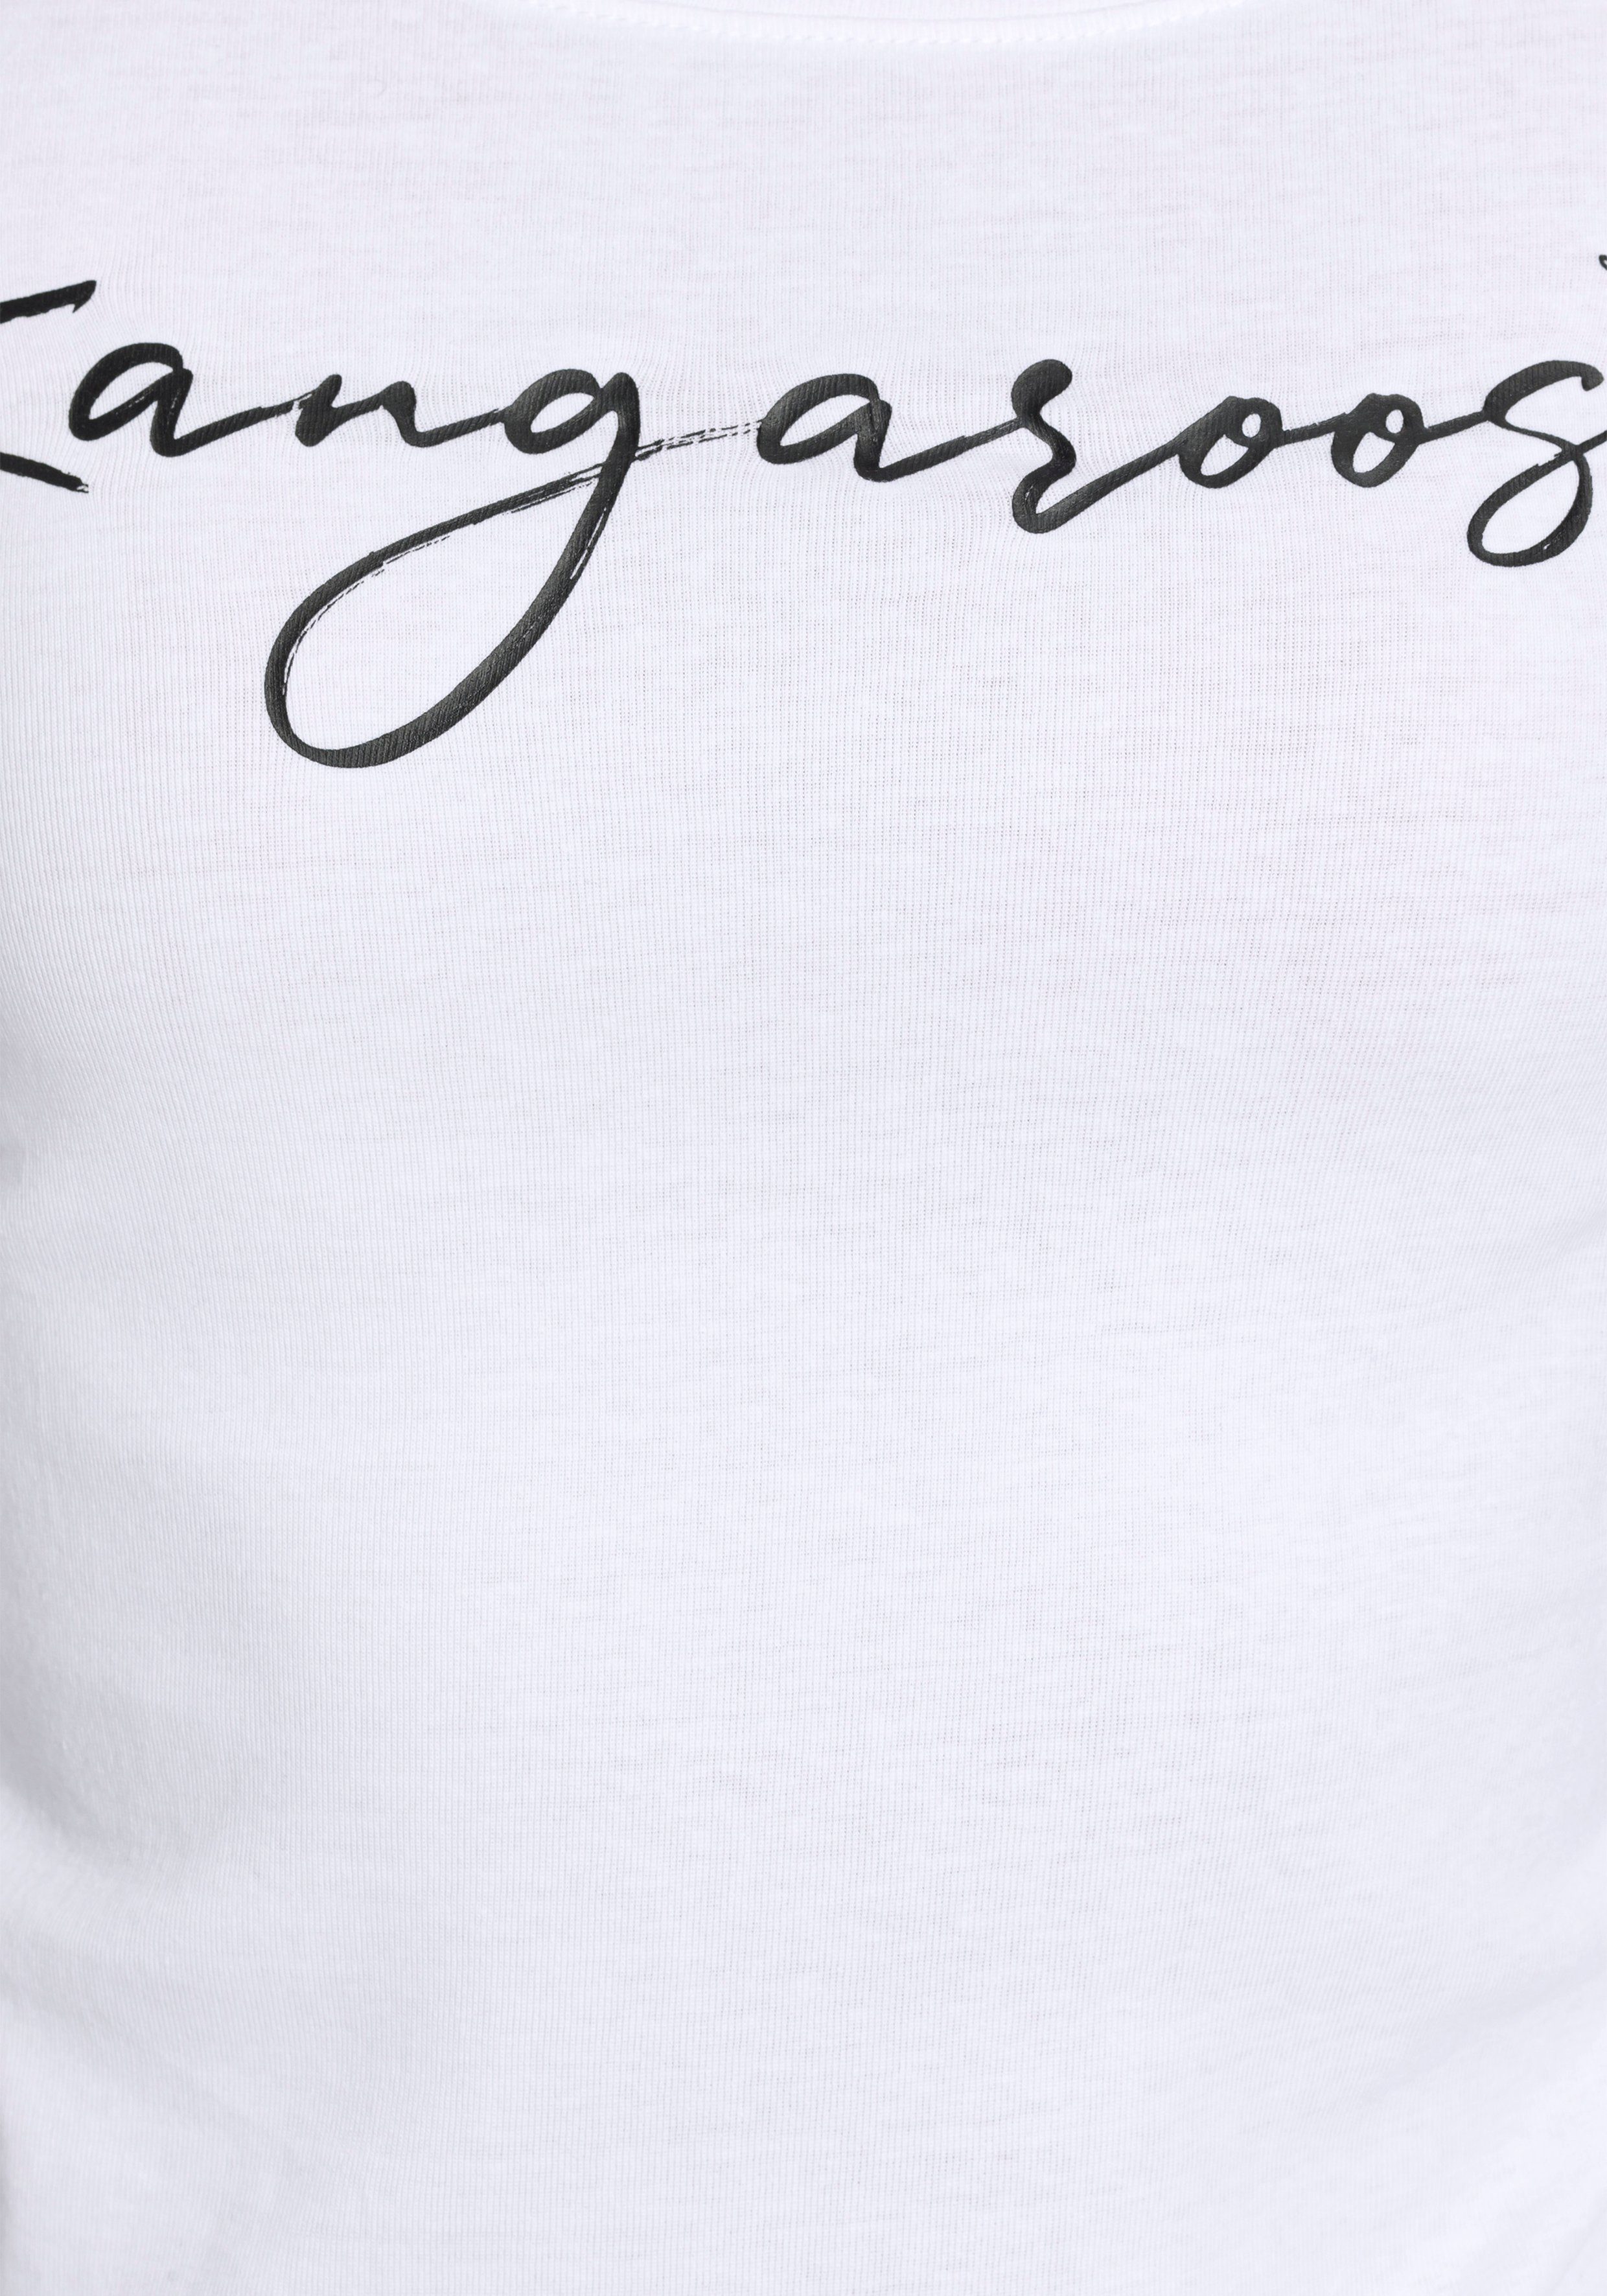 KangaROOS Longsleeve met trendy logo-opschrift